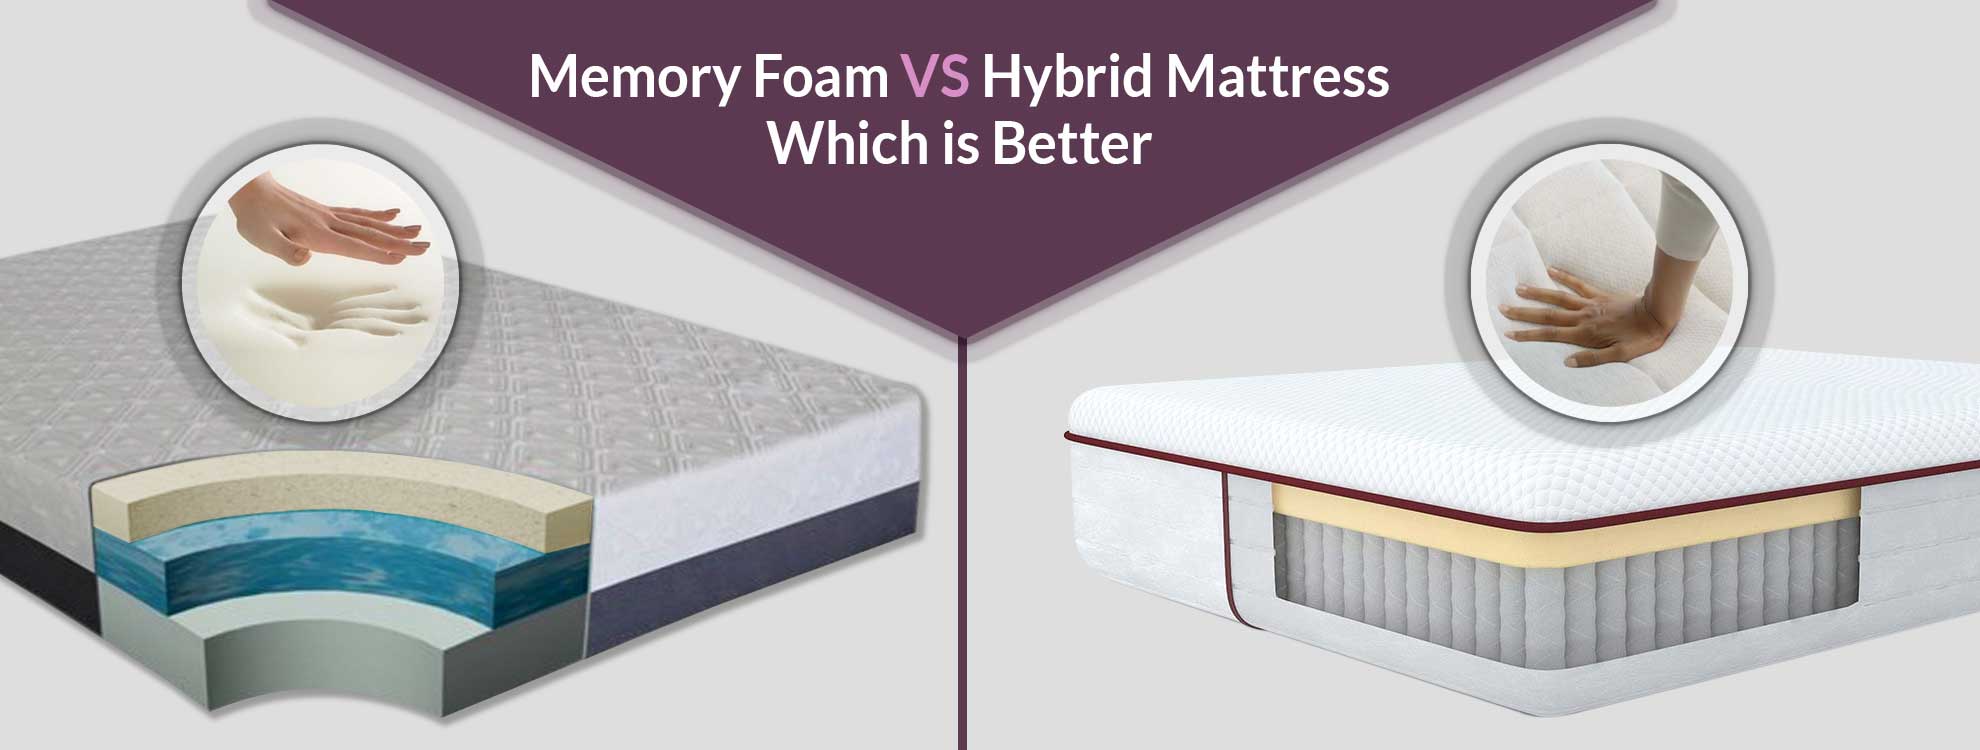 What Is Better Memory Foam Or Hybrid Mattress